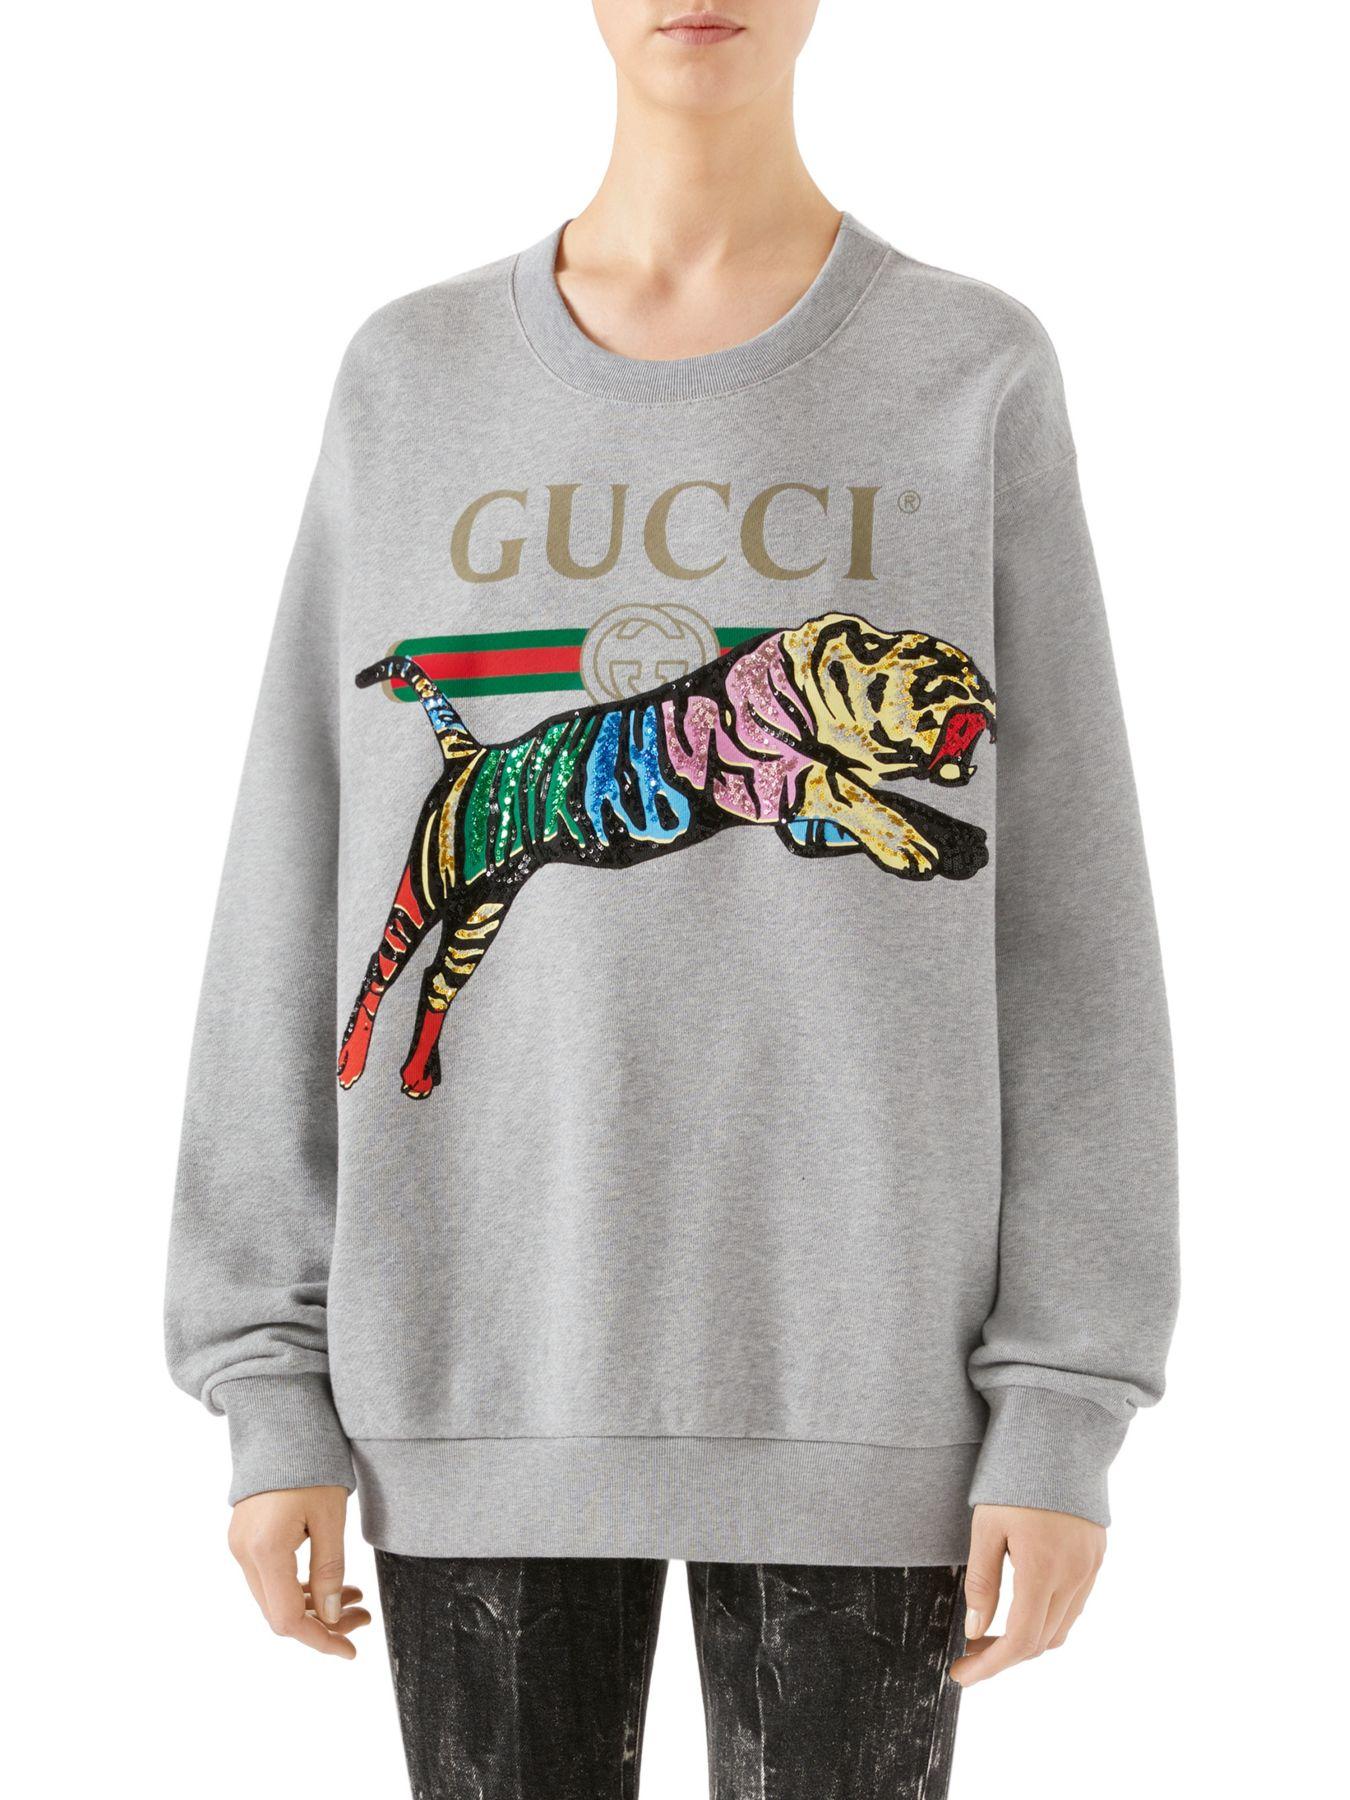 Gucci Sequin Tiger Sweatshirt in Gray | Lyst